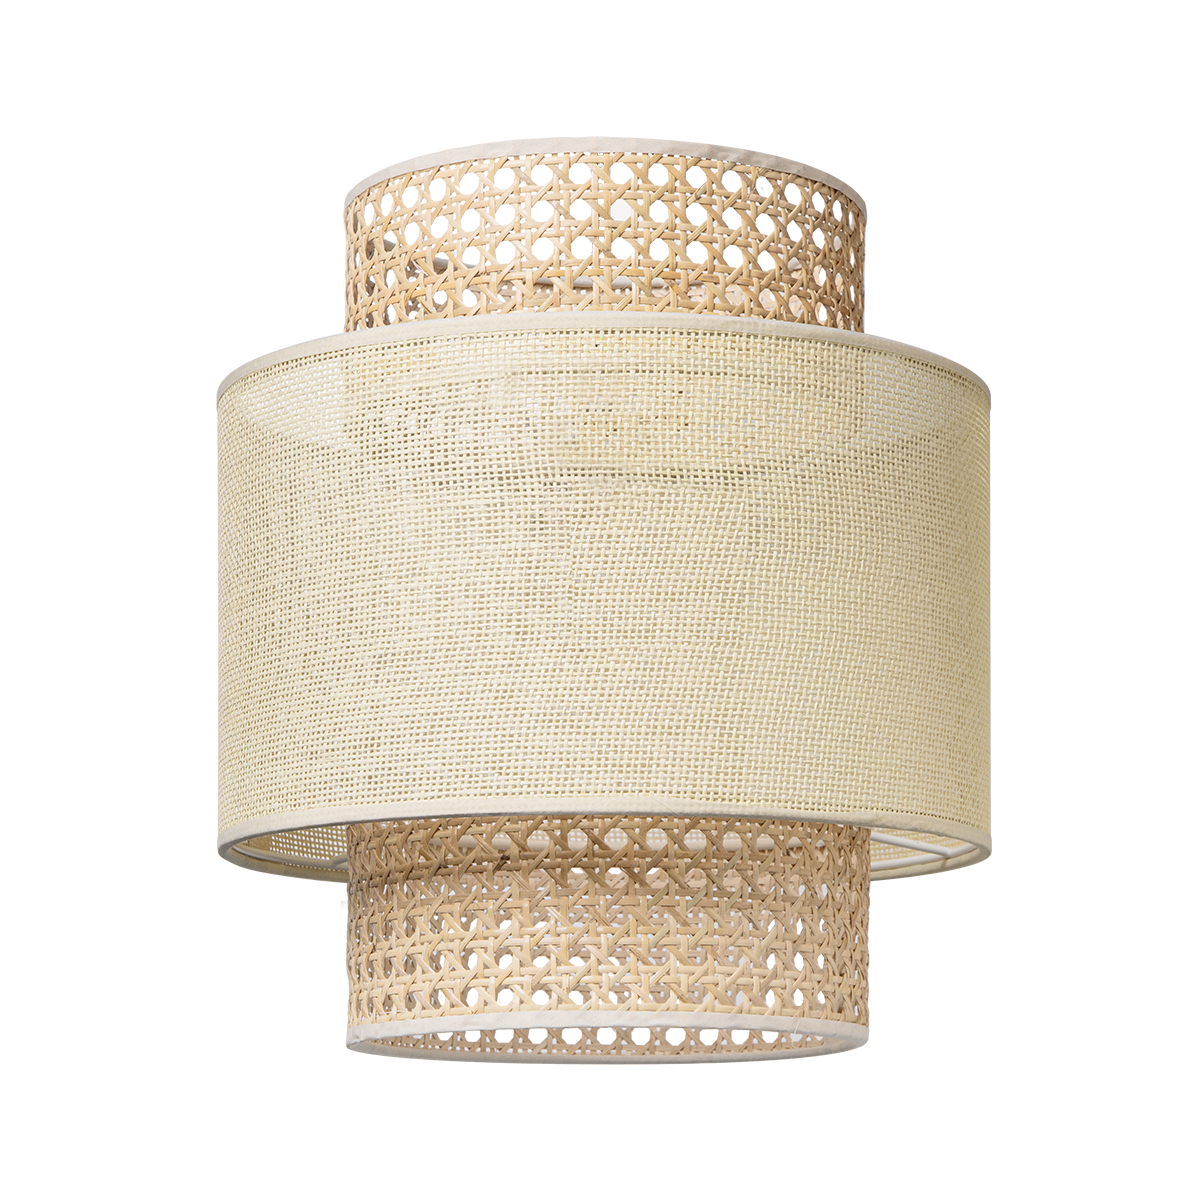 Tangla lighting - TLS7085-01M - Lampshade - paper rattan and linen - natural - chimney - medium - diameter 30cm - E27